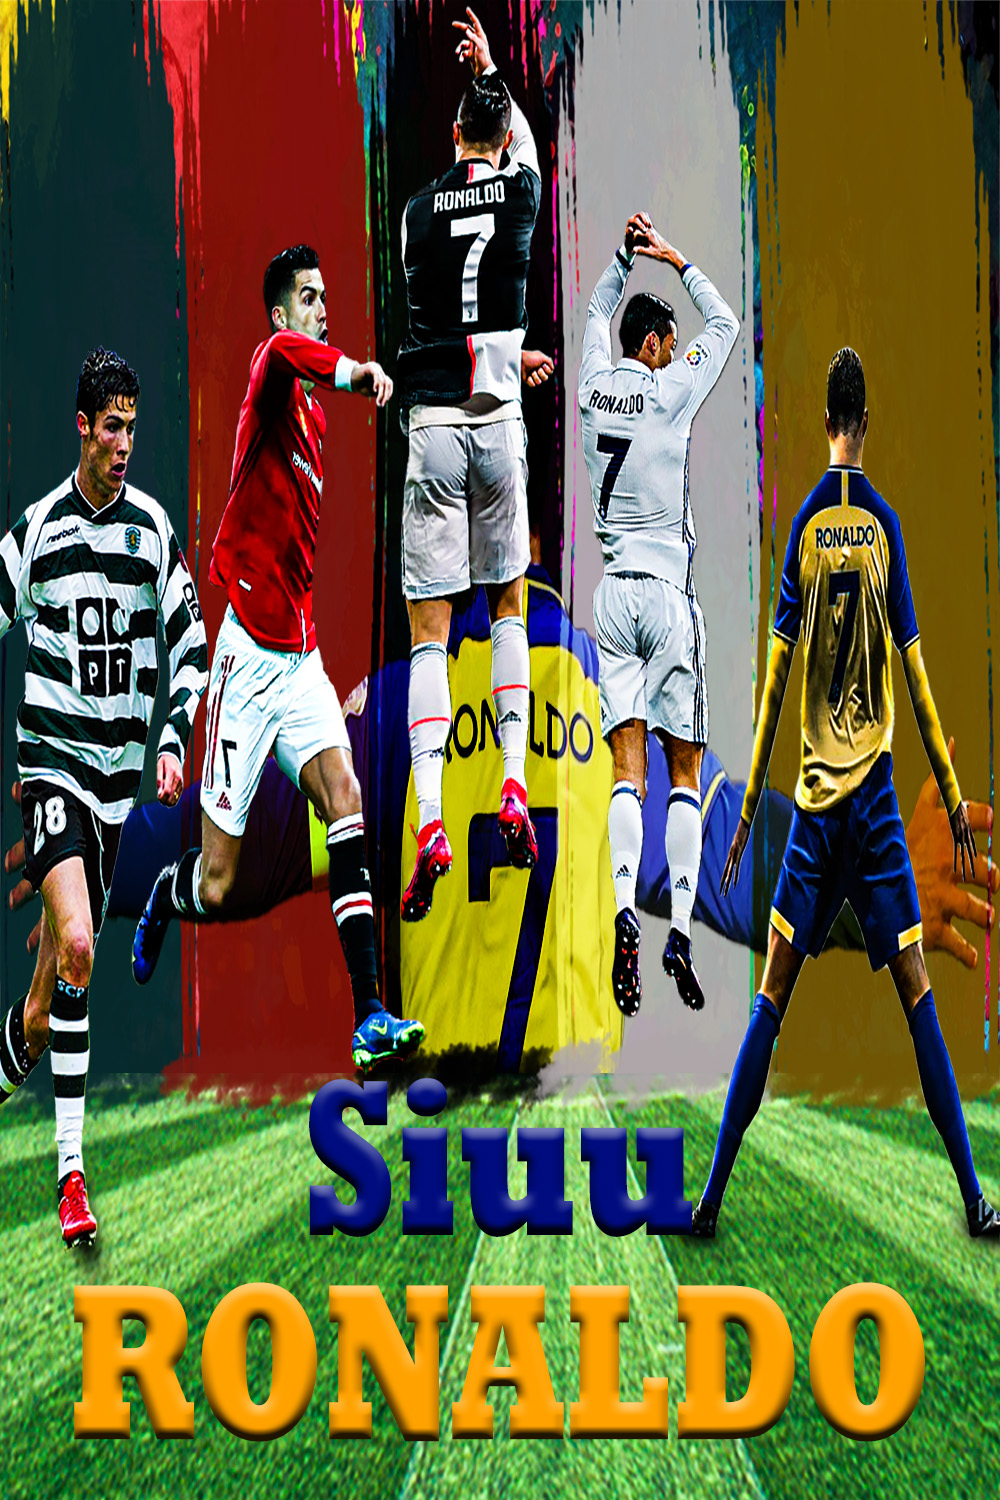 Christiano Ronaldo Siuu pinterest preview image.